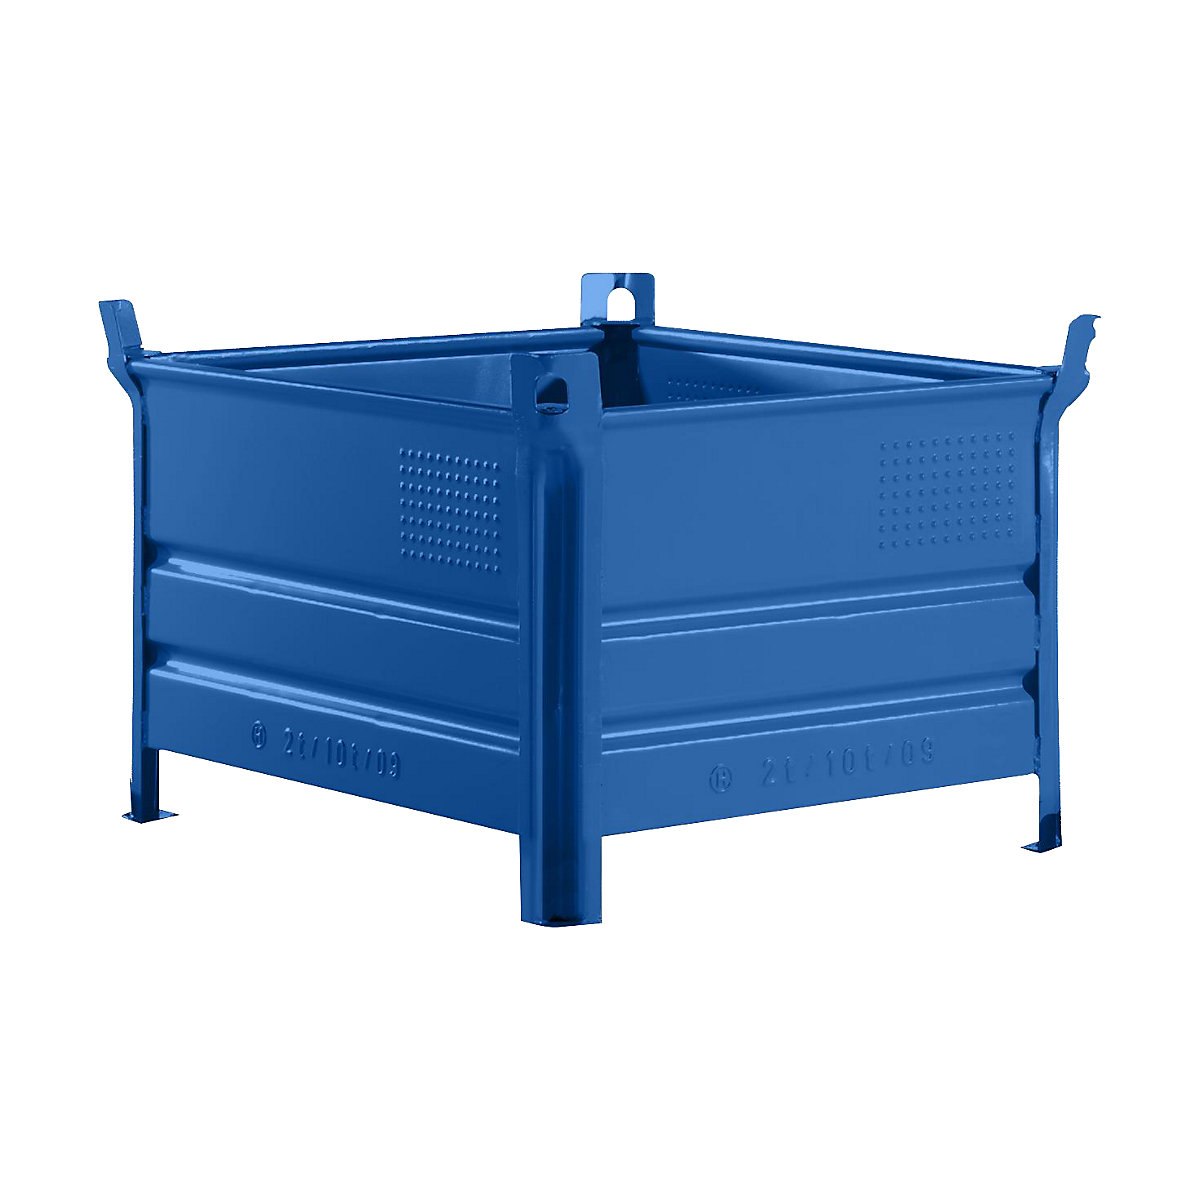 Vollwand-Stapelbehälter Heson, BxL 800 x 1000 mm, Traglast 500 kg, blau, ab 10 Stk-8